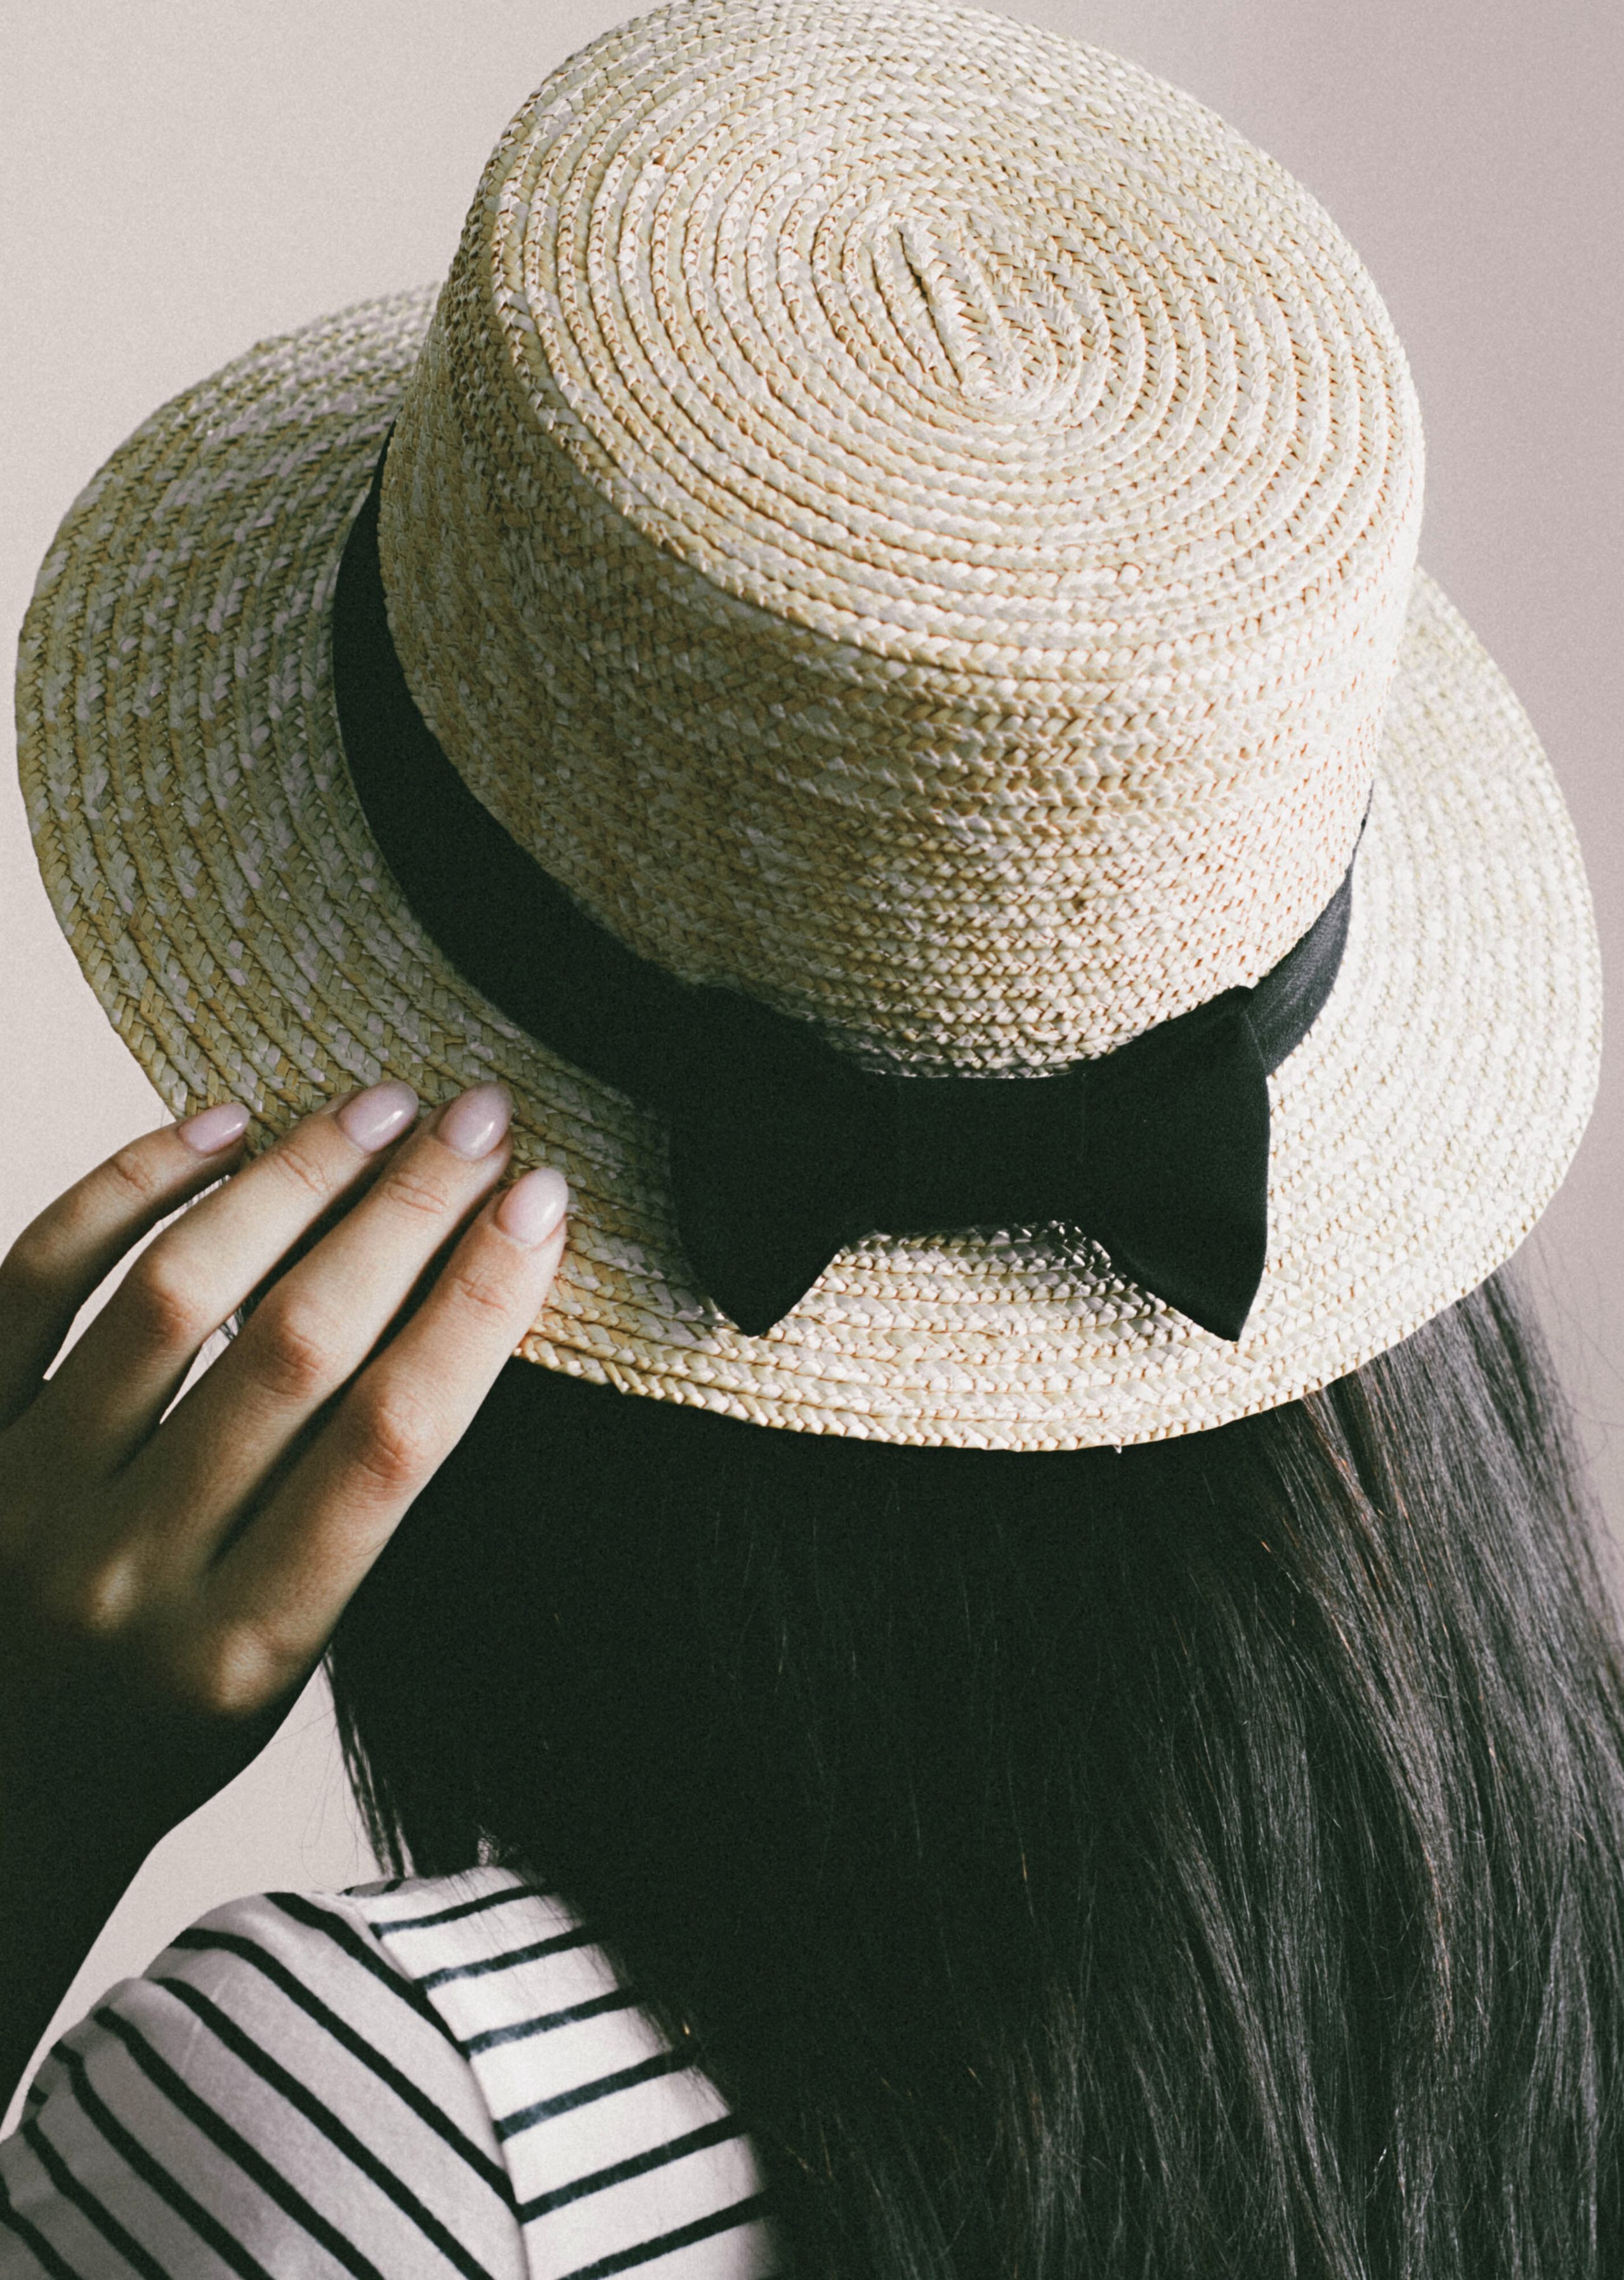 Myth 6: Wearing hats can cause hair loss